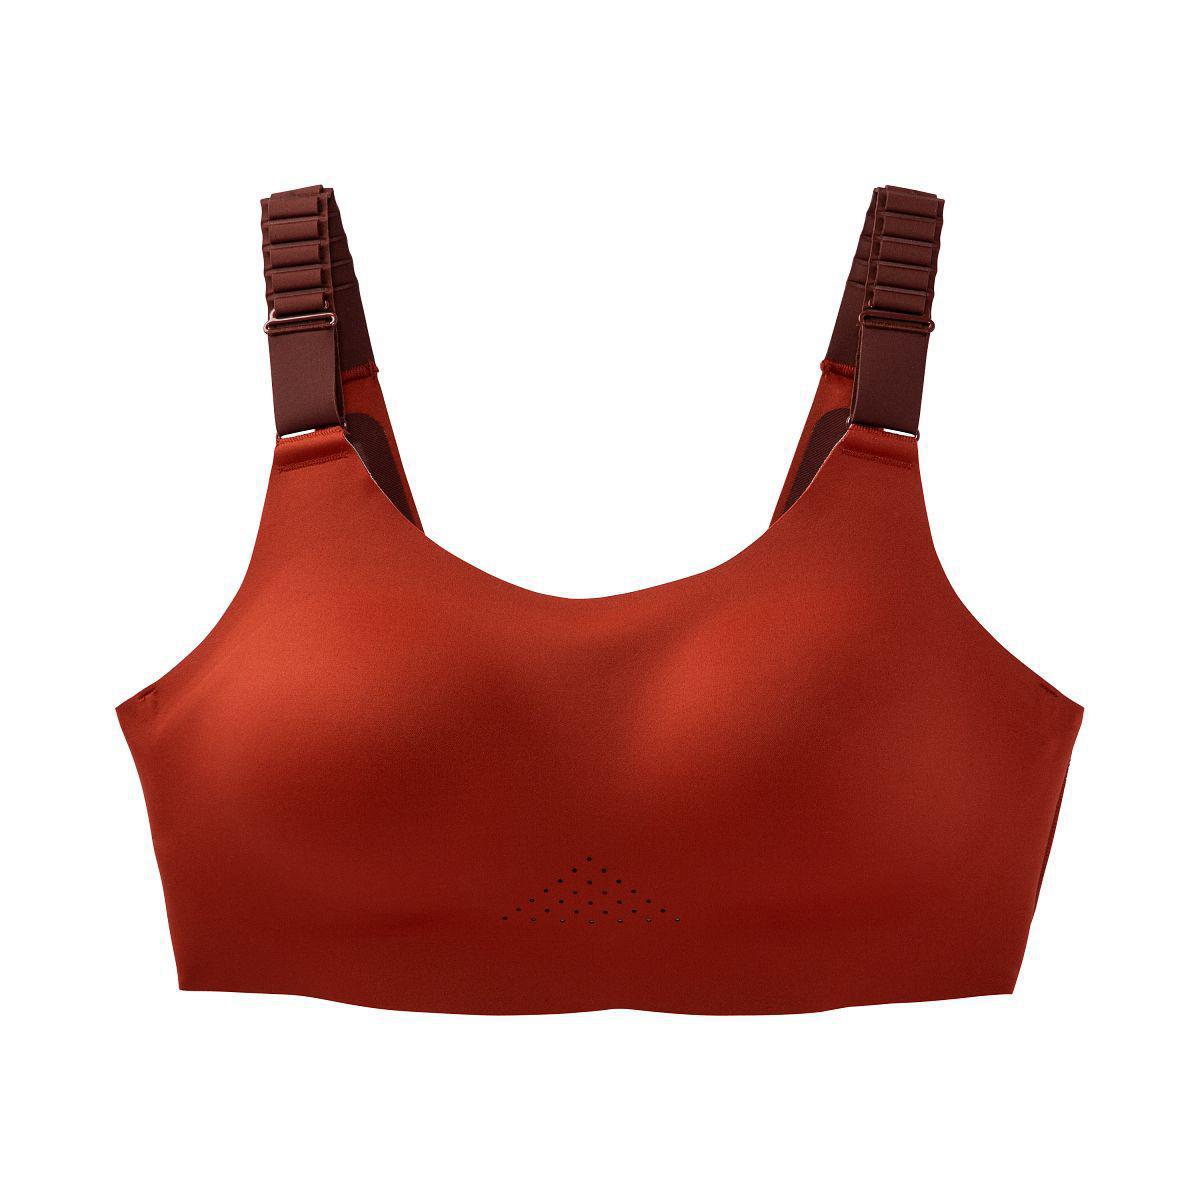 Has anyone tried the Forme bra? : r/ABraThatFits